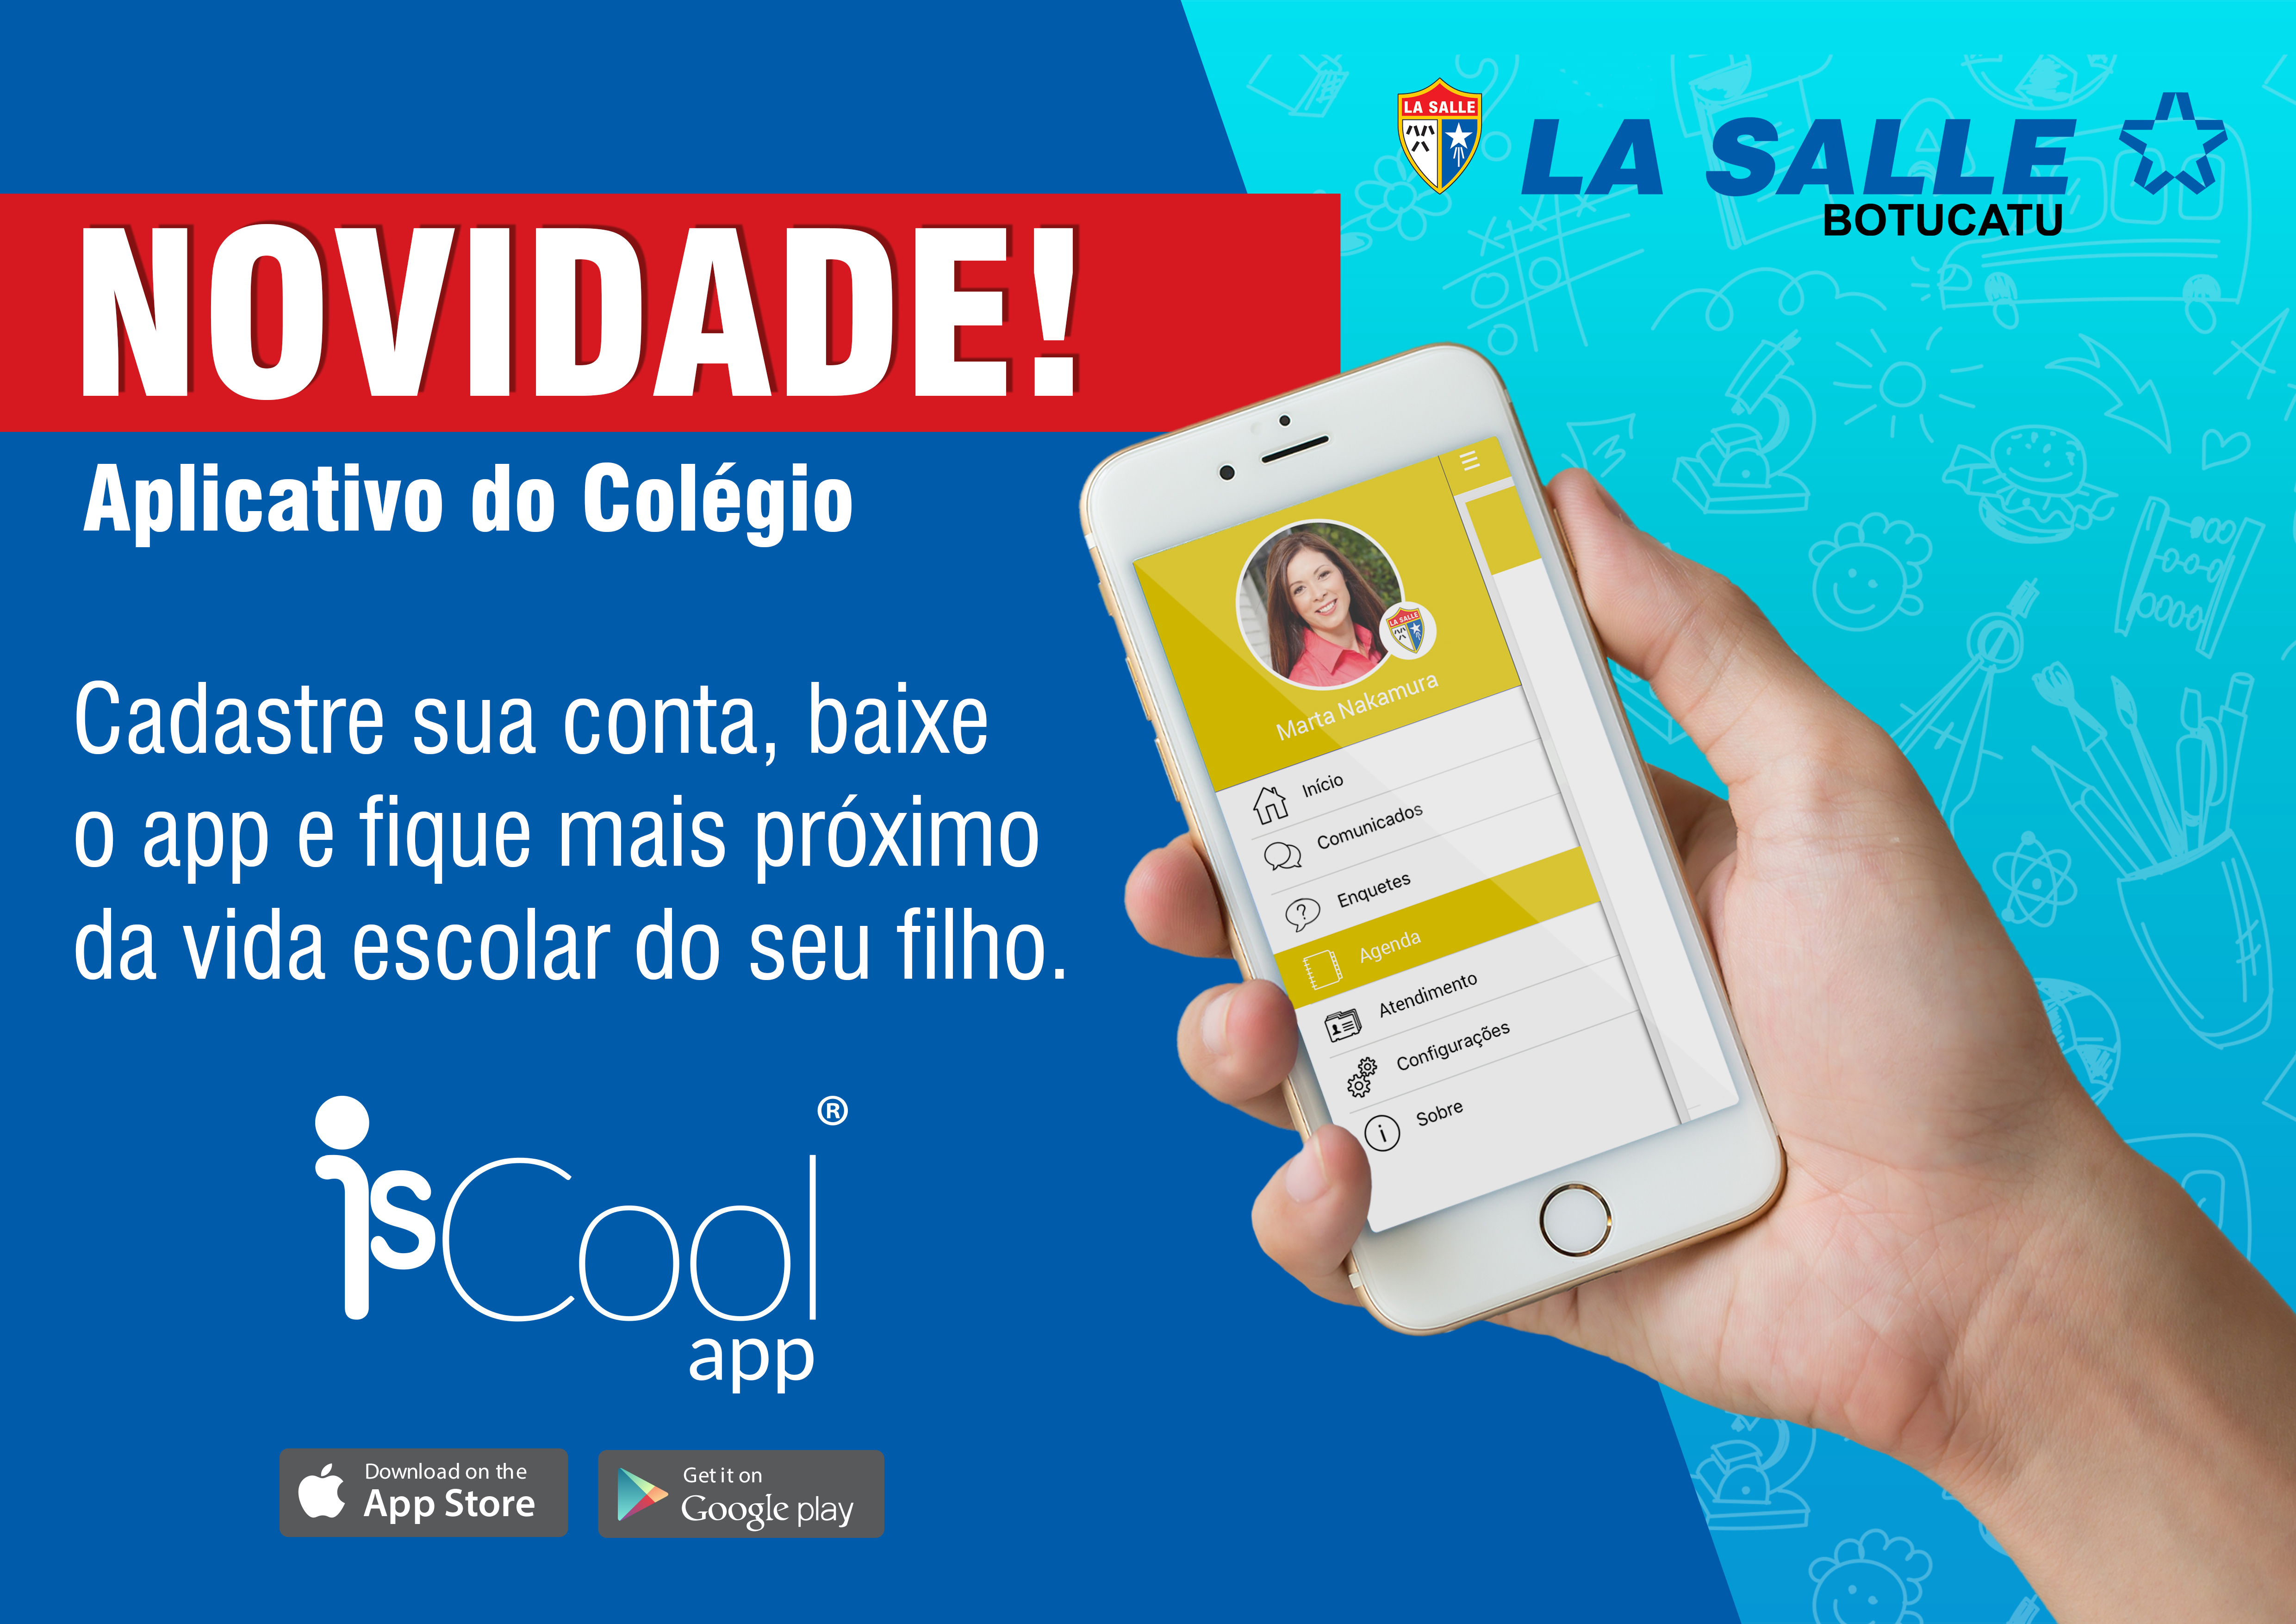 IsCool app